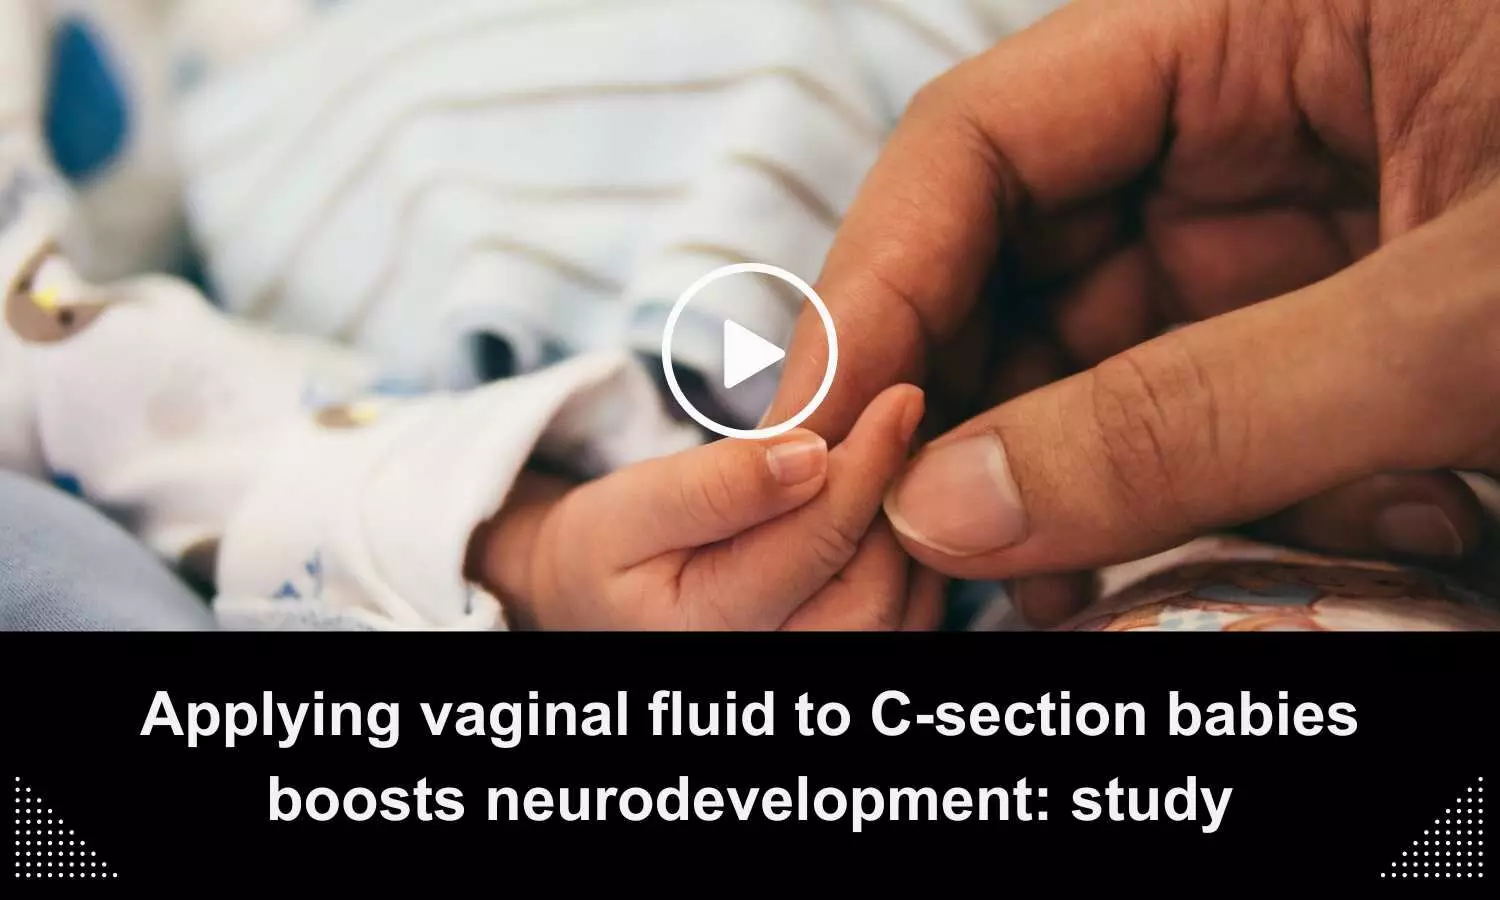 Applying vaginal fluid to C-section babies boosts neurodevelopment: study